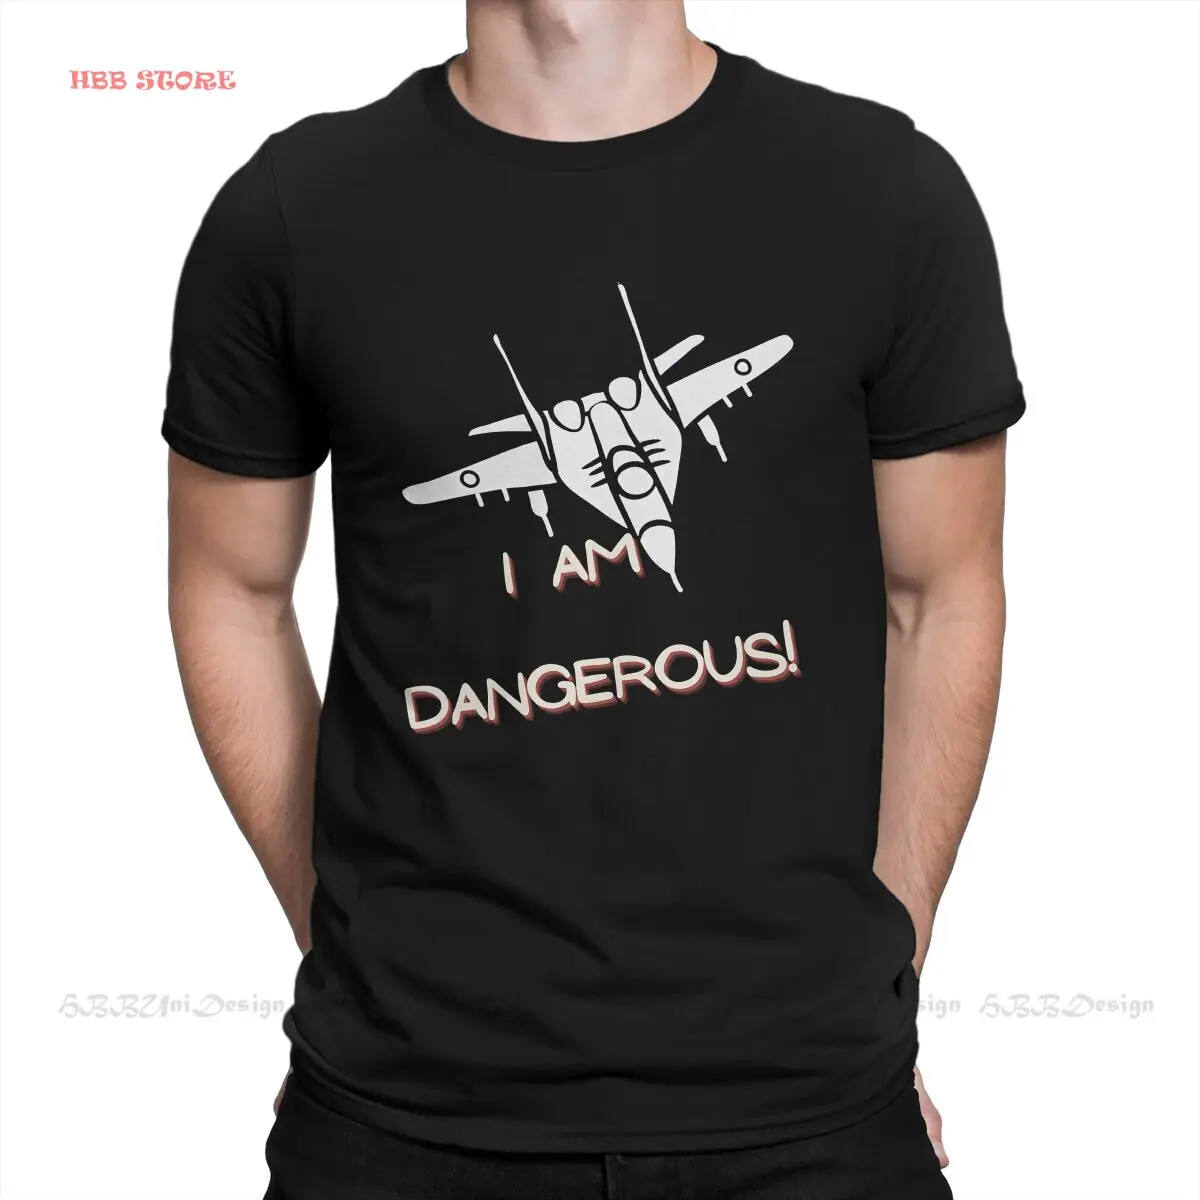 I AM DANGEROUS Hip Hop TShirt Top Gun Maverick Goose Film Style Streetwear Leisure T Shirt Men Short Sleeve Unique Gift Idea